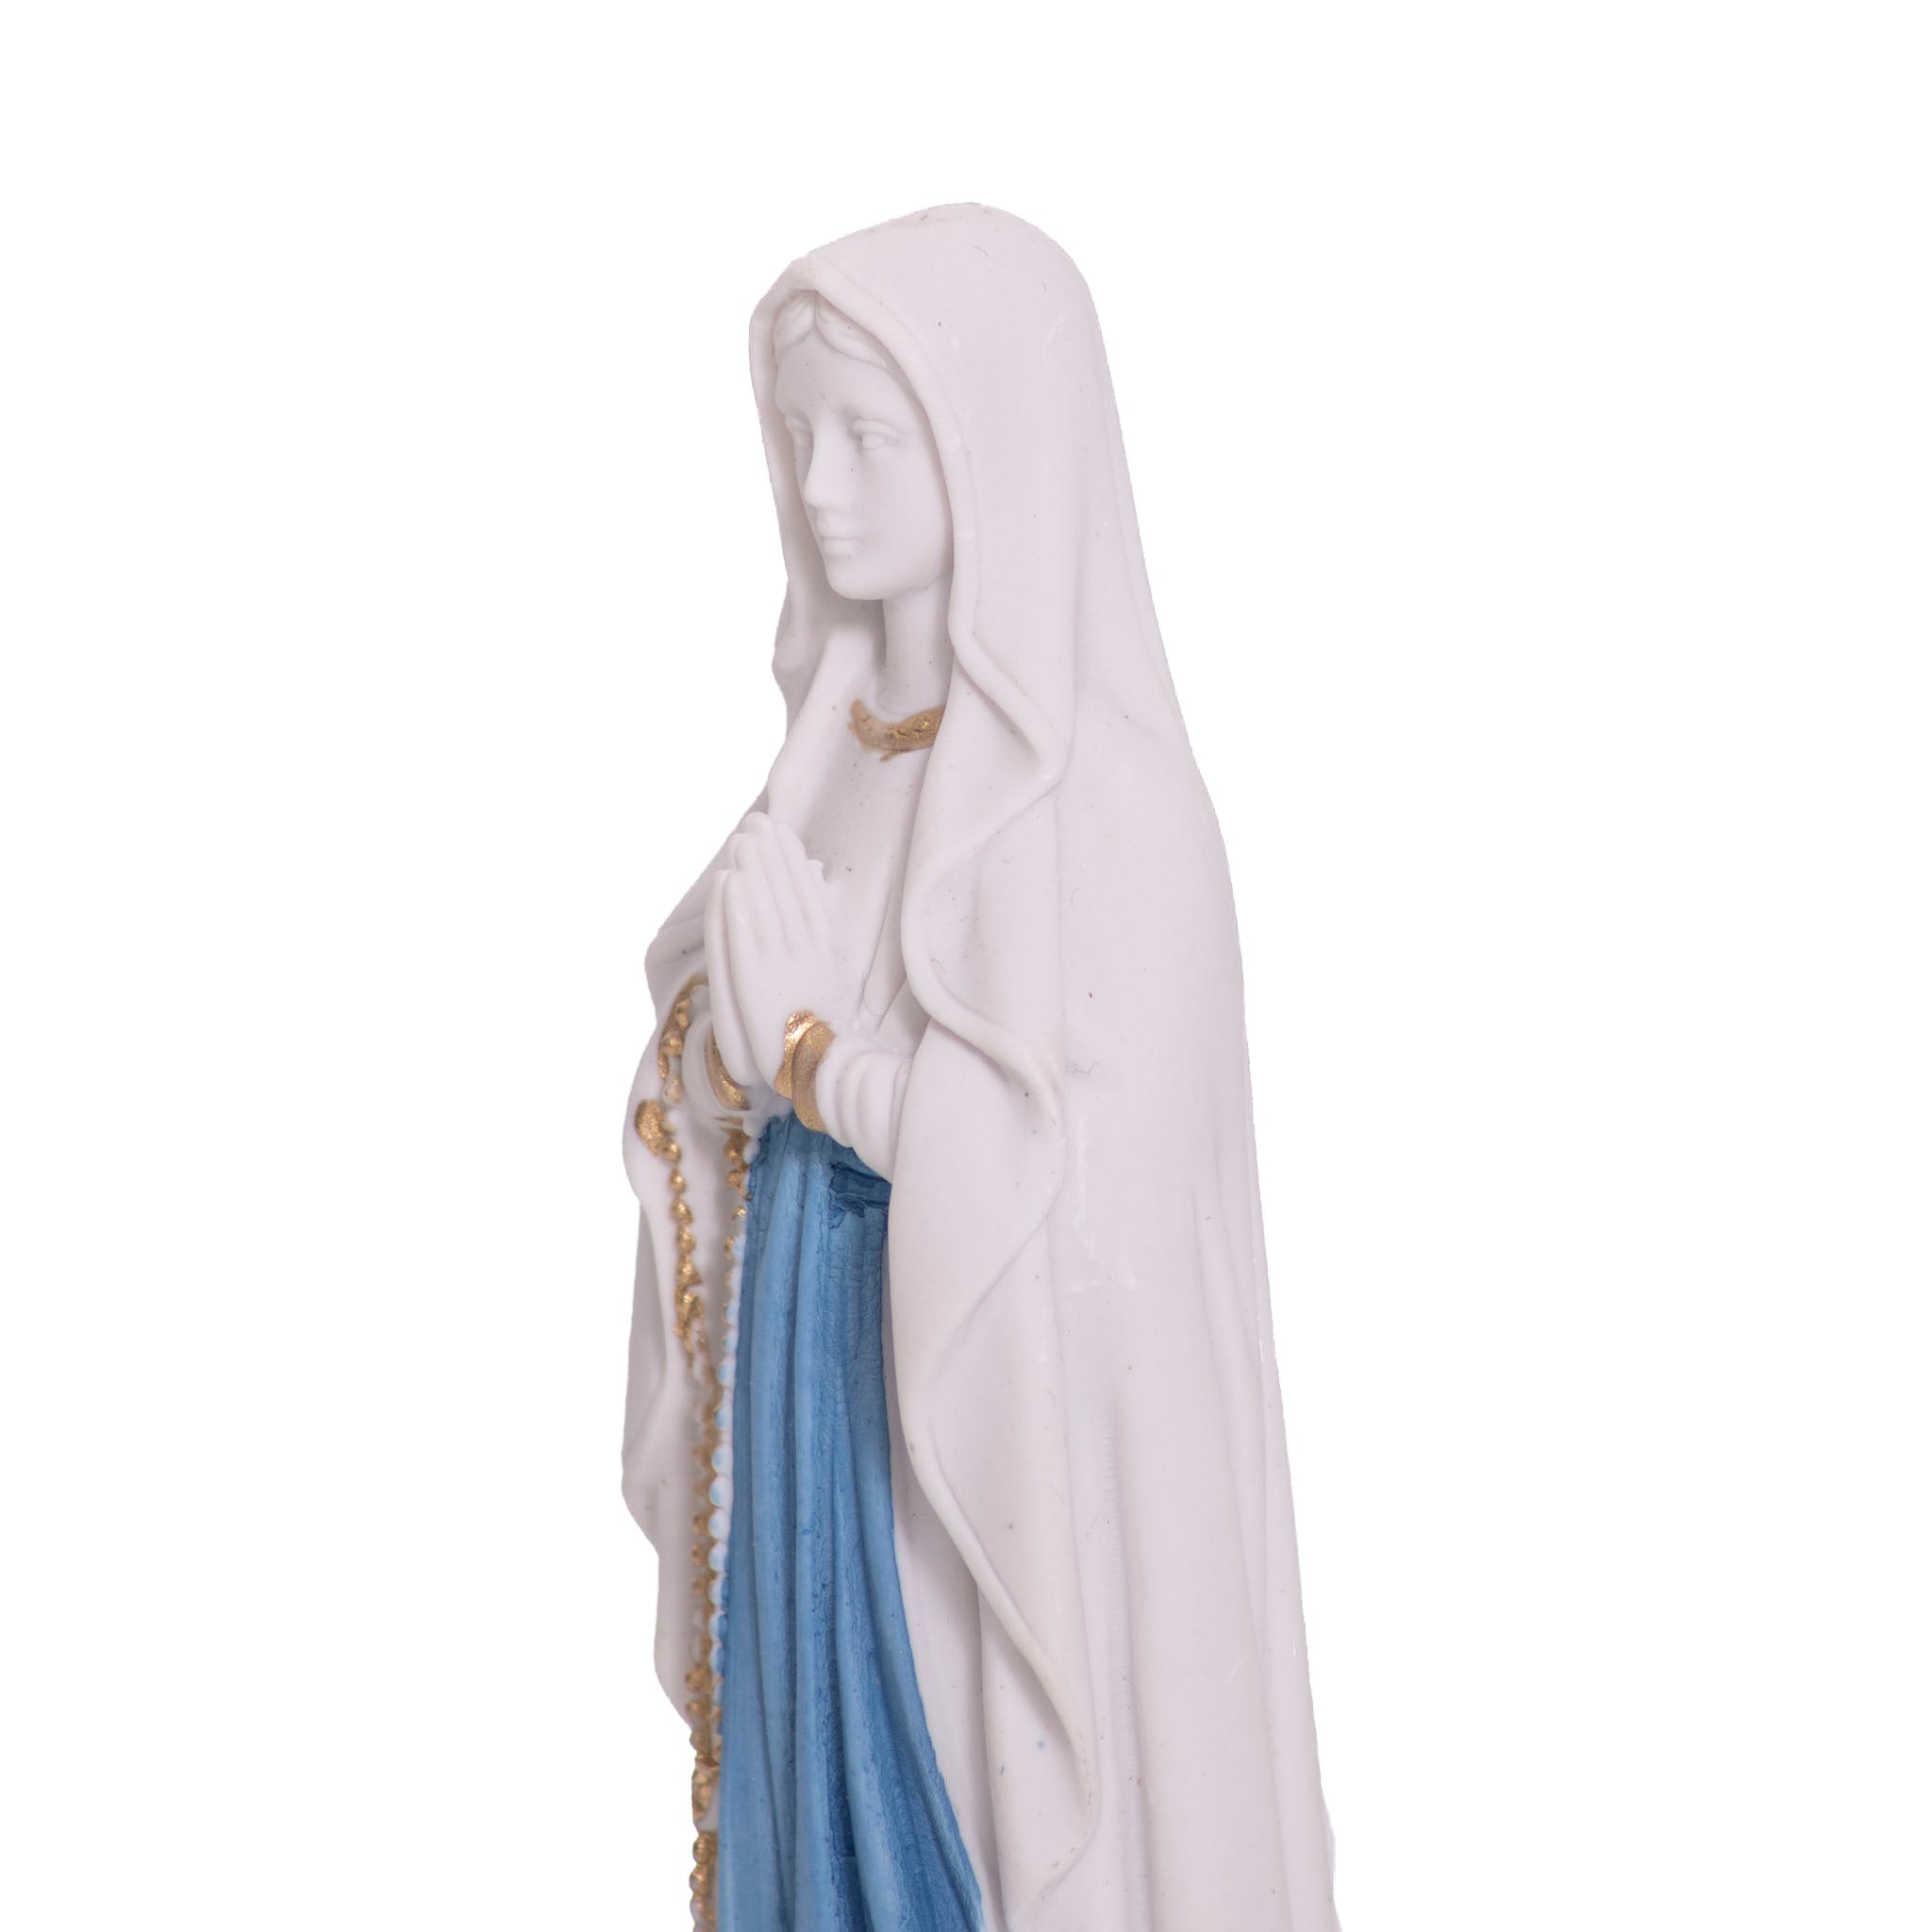 Statua in resina bianca Vergine di Lourdes Pasquini - Galleria Mariana